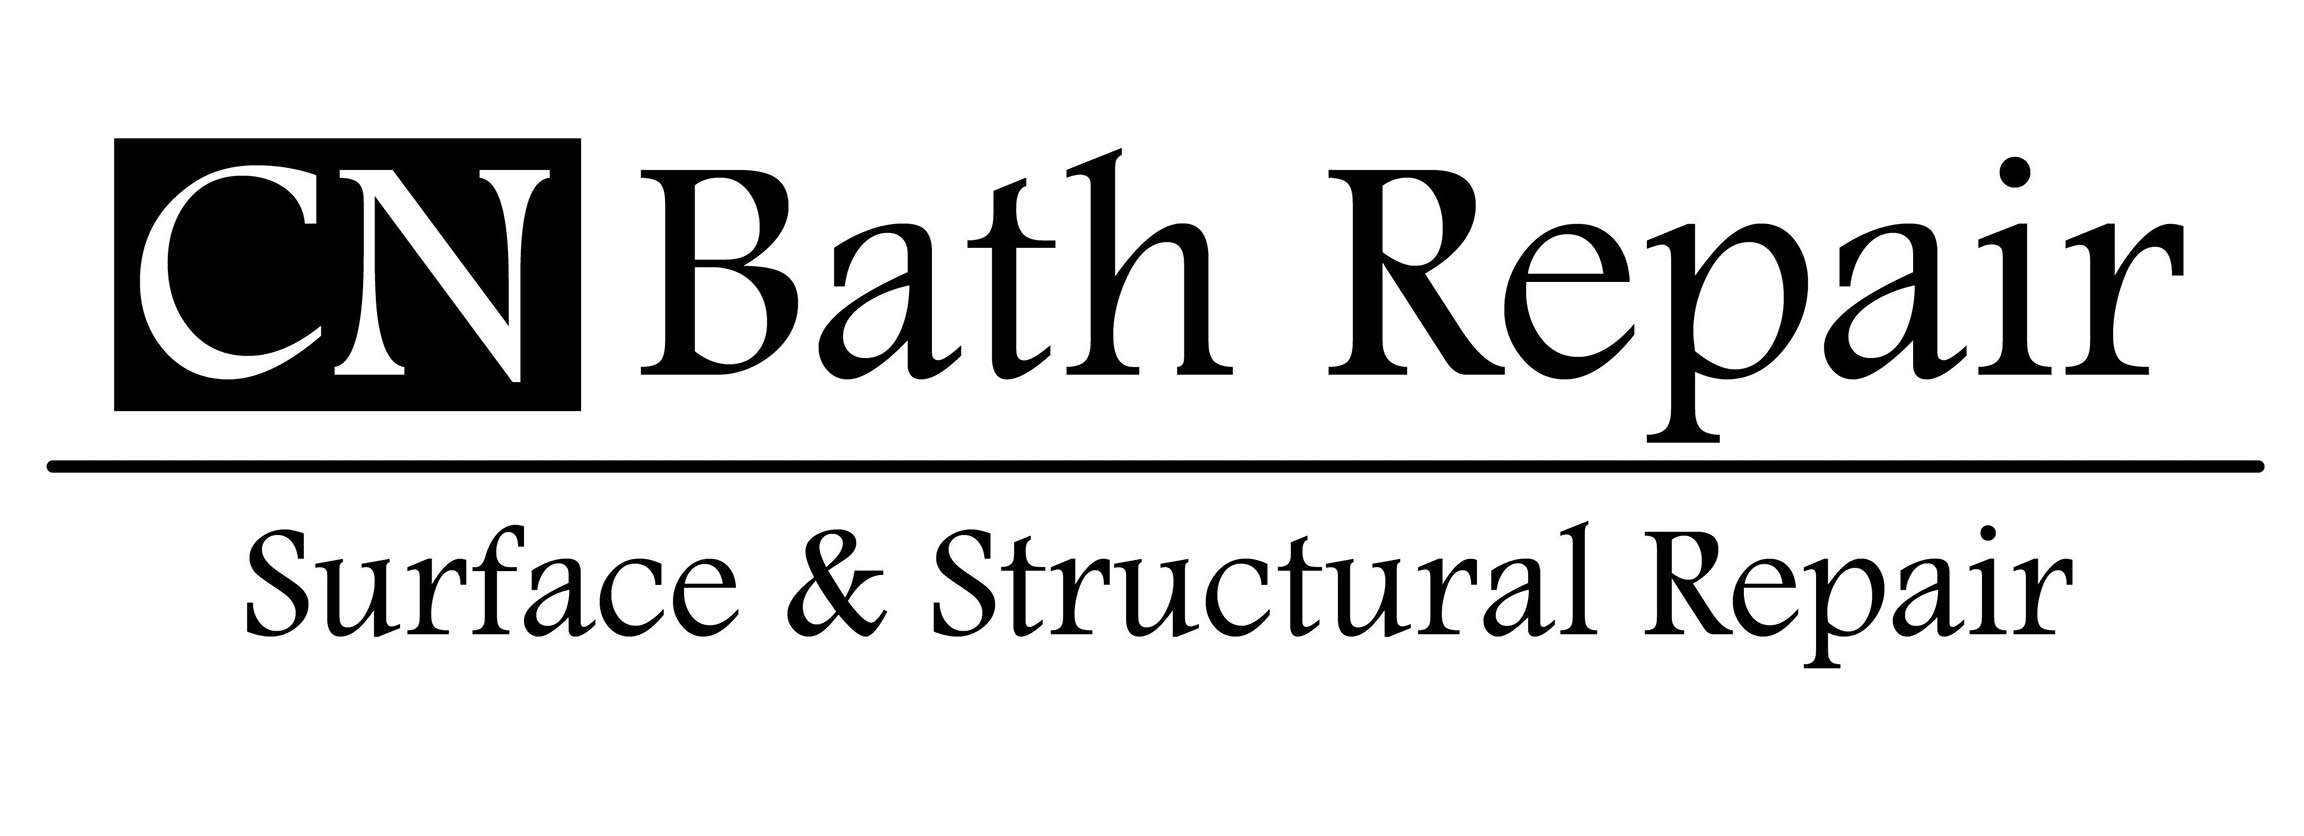 CN Bath Repair Logo